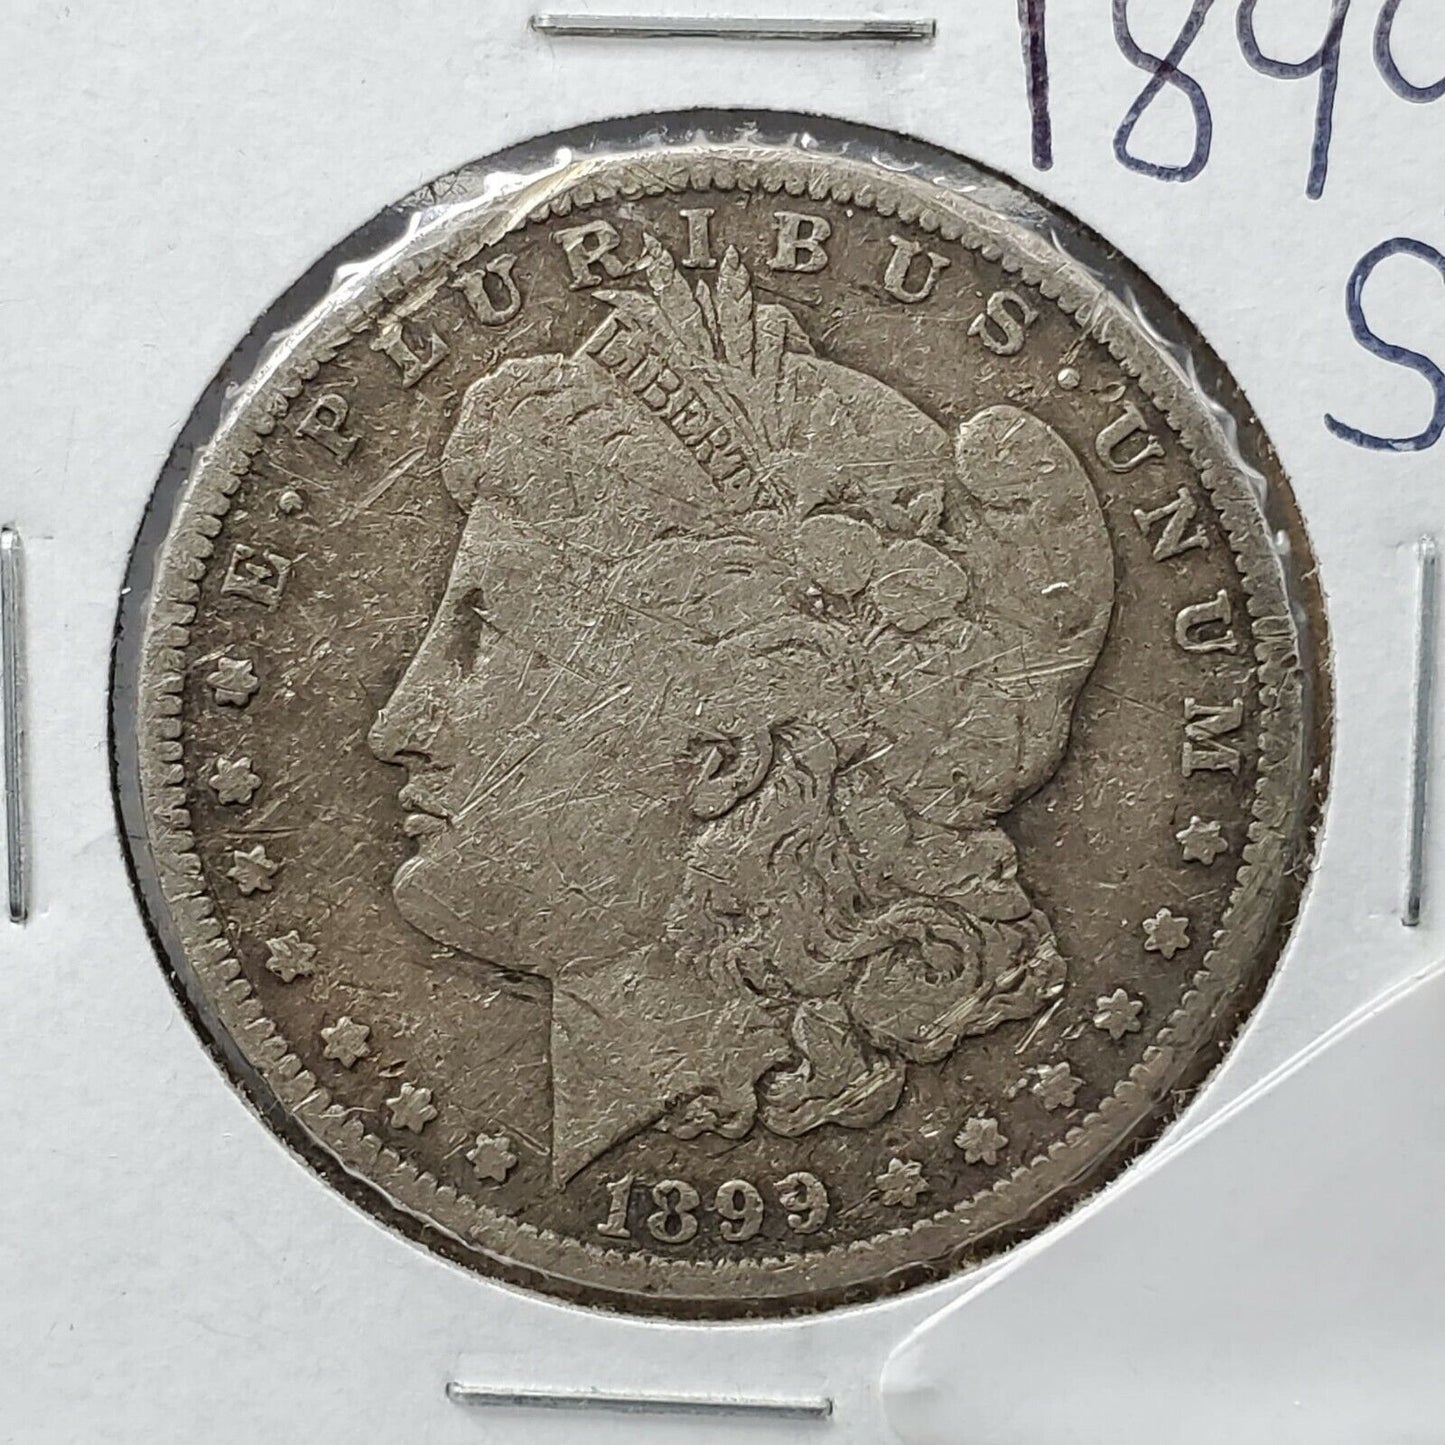 1899 S $1 Morgan Silver Eagle Dollar Coin Choice VG Very Good / Fine detail